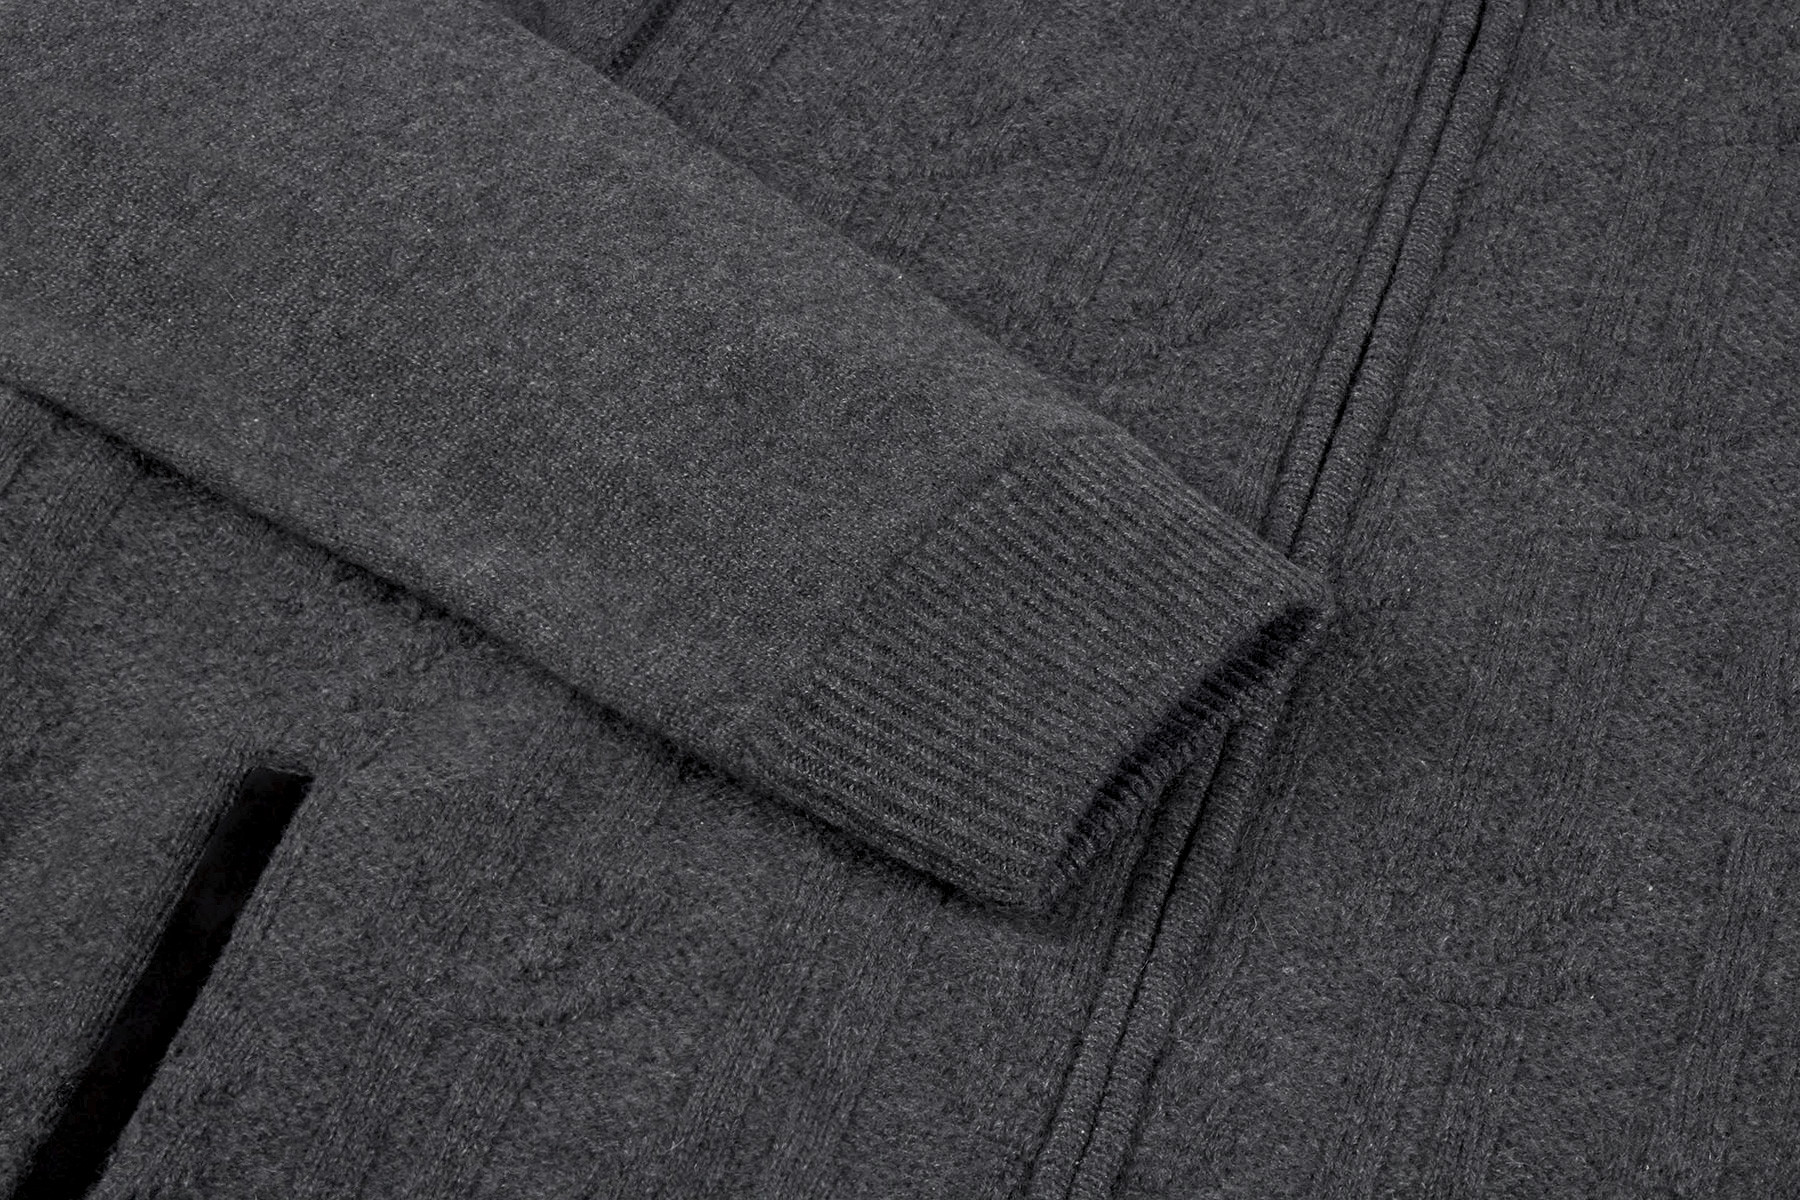 Smoke-grey zipped cardigan, sailor-knot jacquard weave